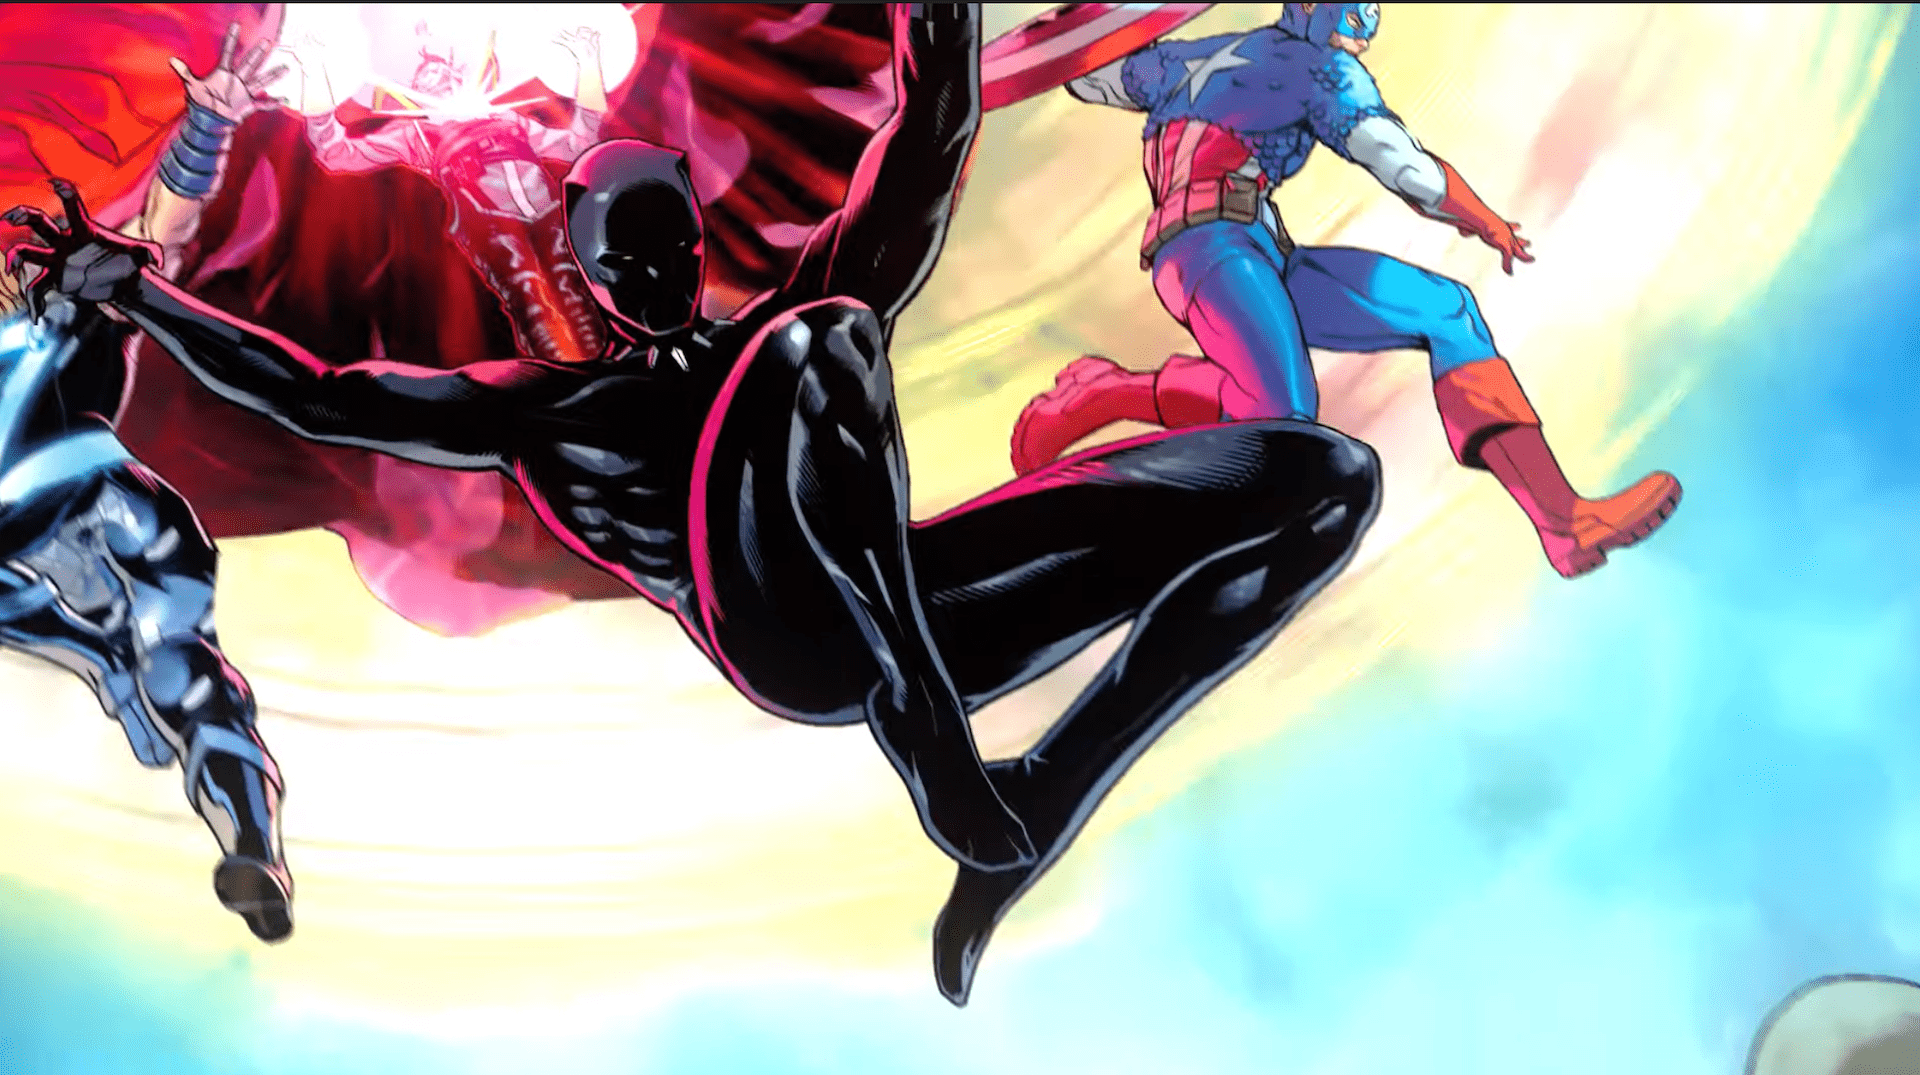 Marvel Comics releases 'Black Panther' #1 trailer